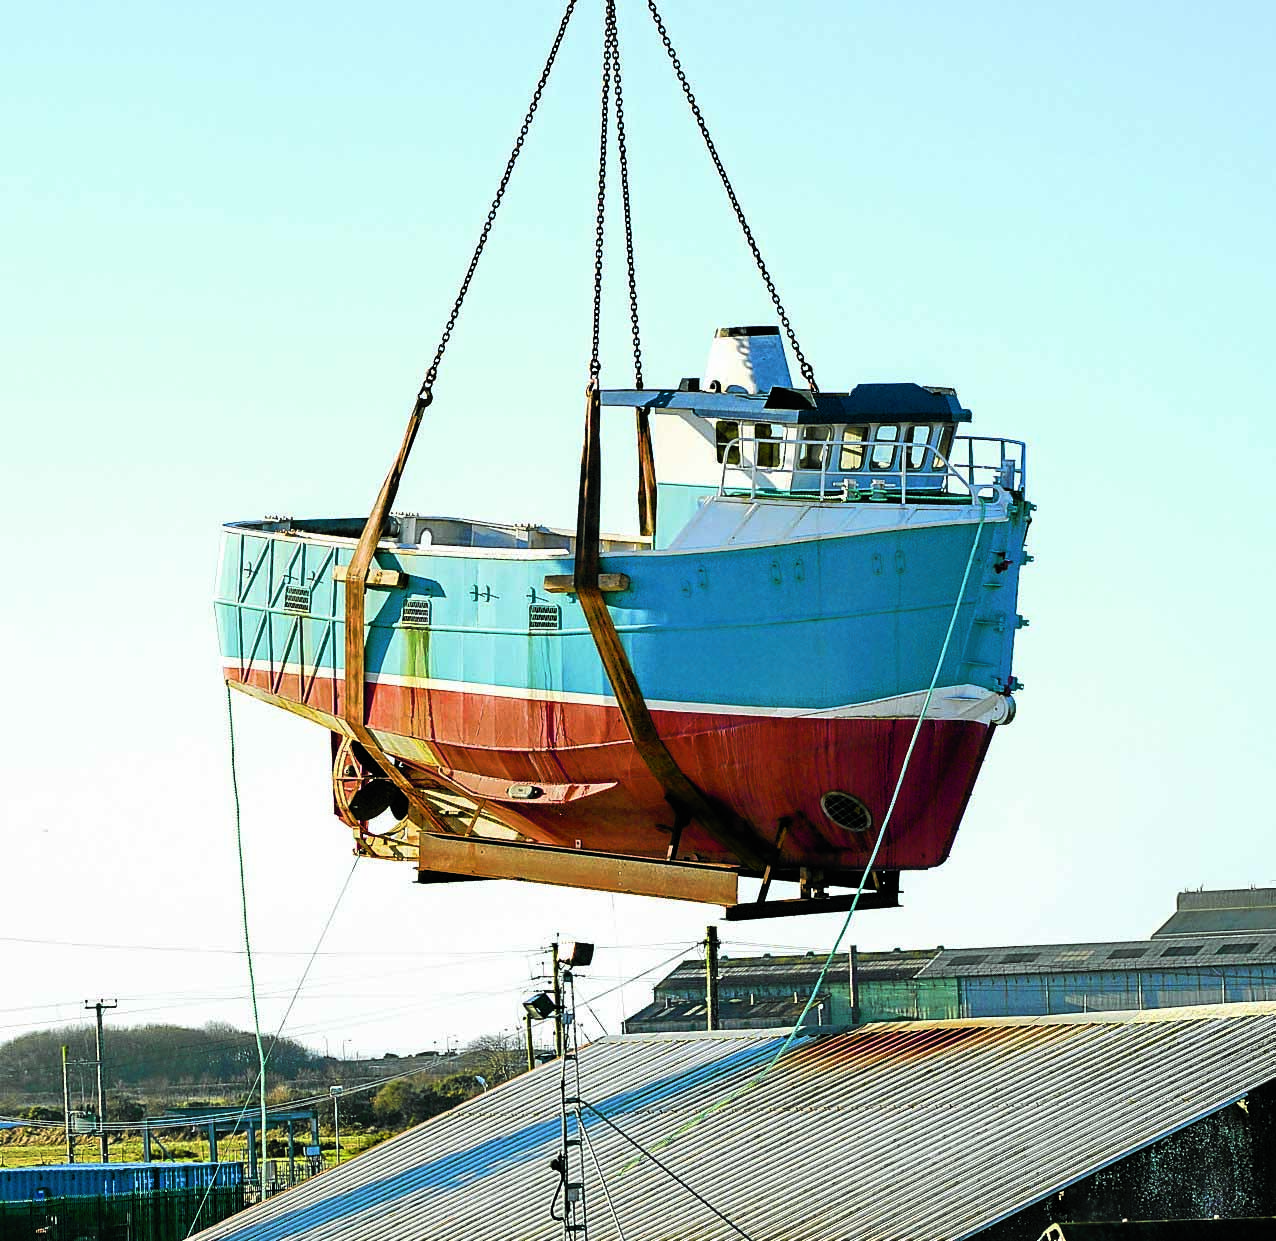 Annan boat lifted into new Irish life